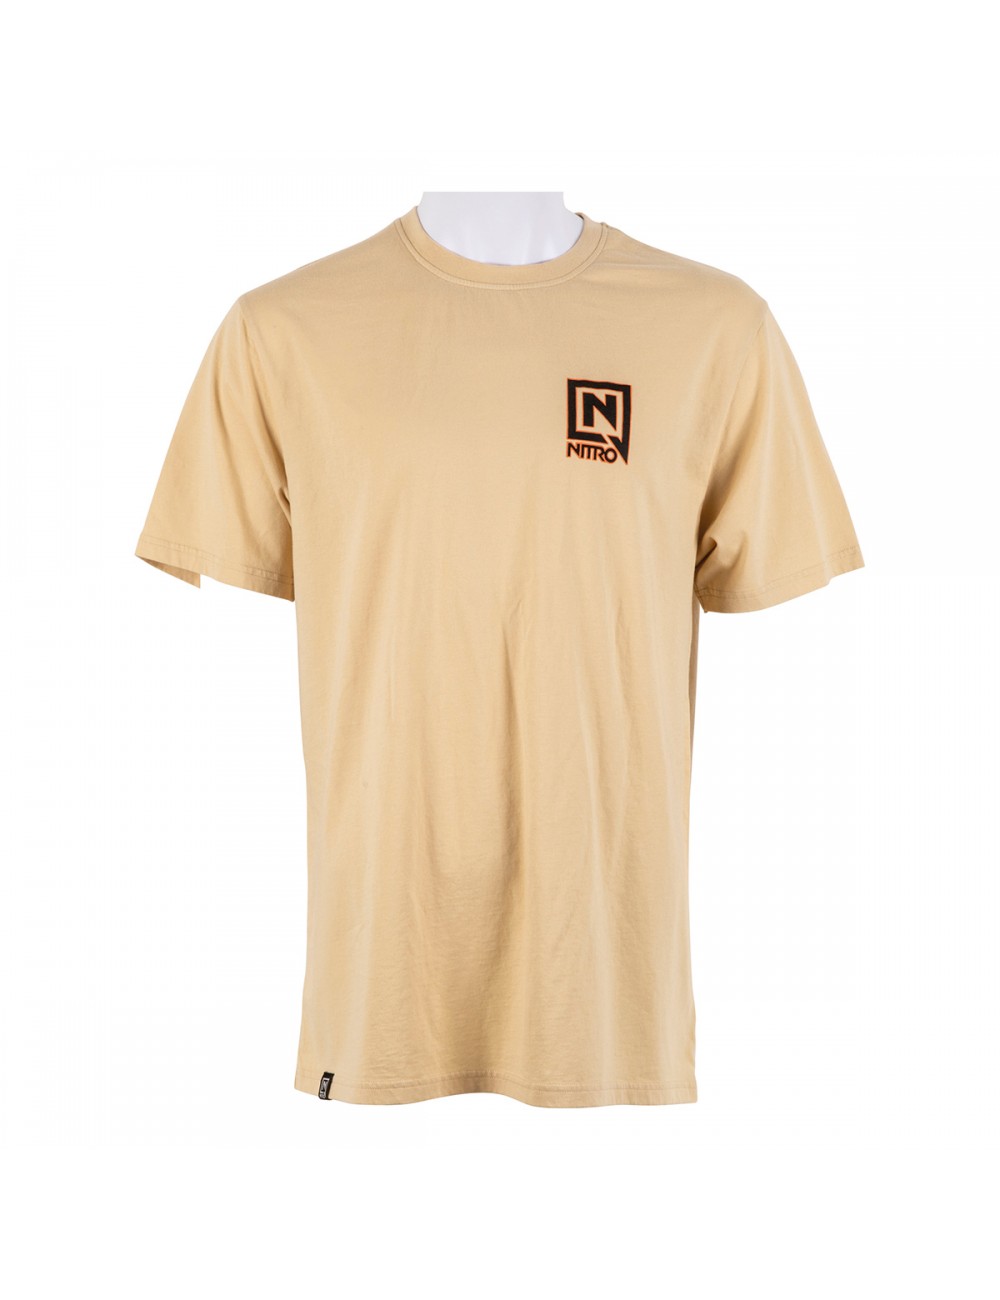 Nitro Support Local Tee Shirt - Khaki